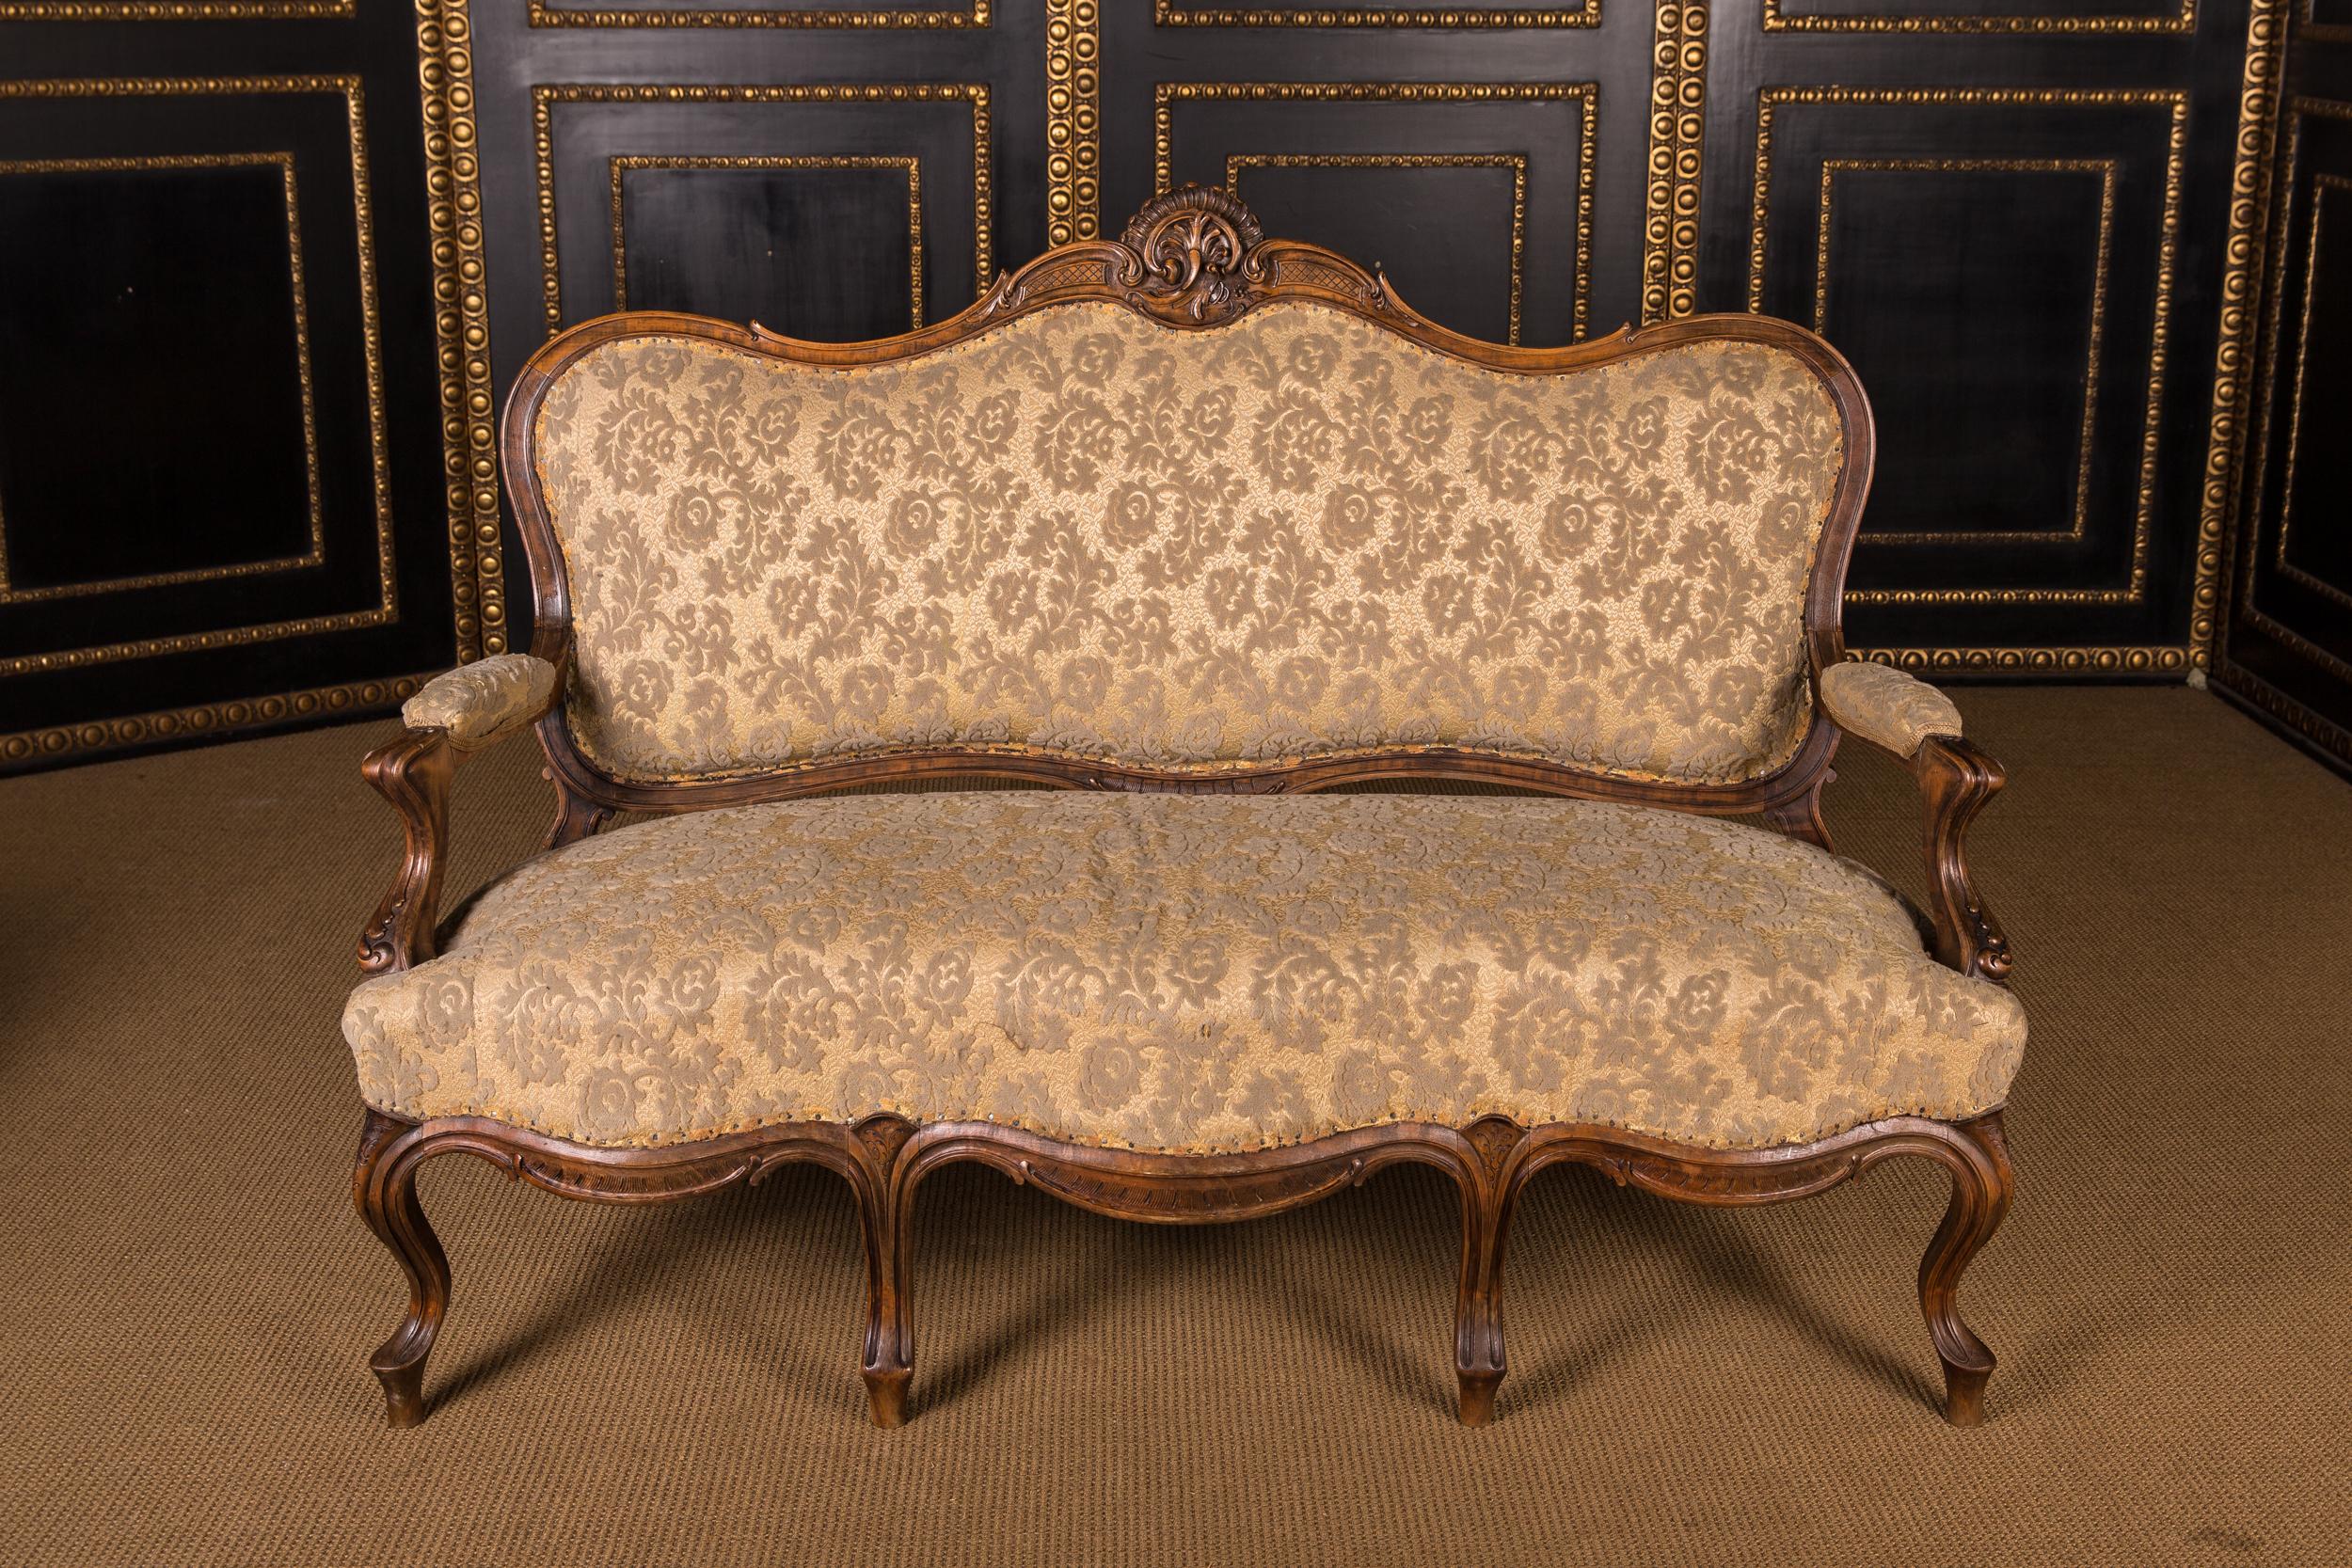 Castle Worthy Salon Group Sofa and Chairs Neo Rococo, circa 1860 (Handgeschnitzt)